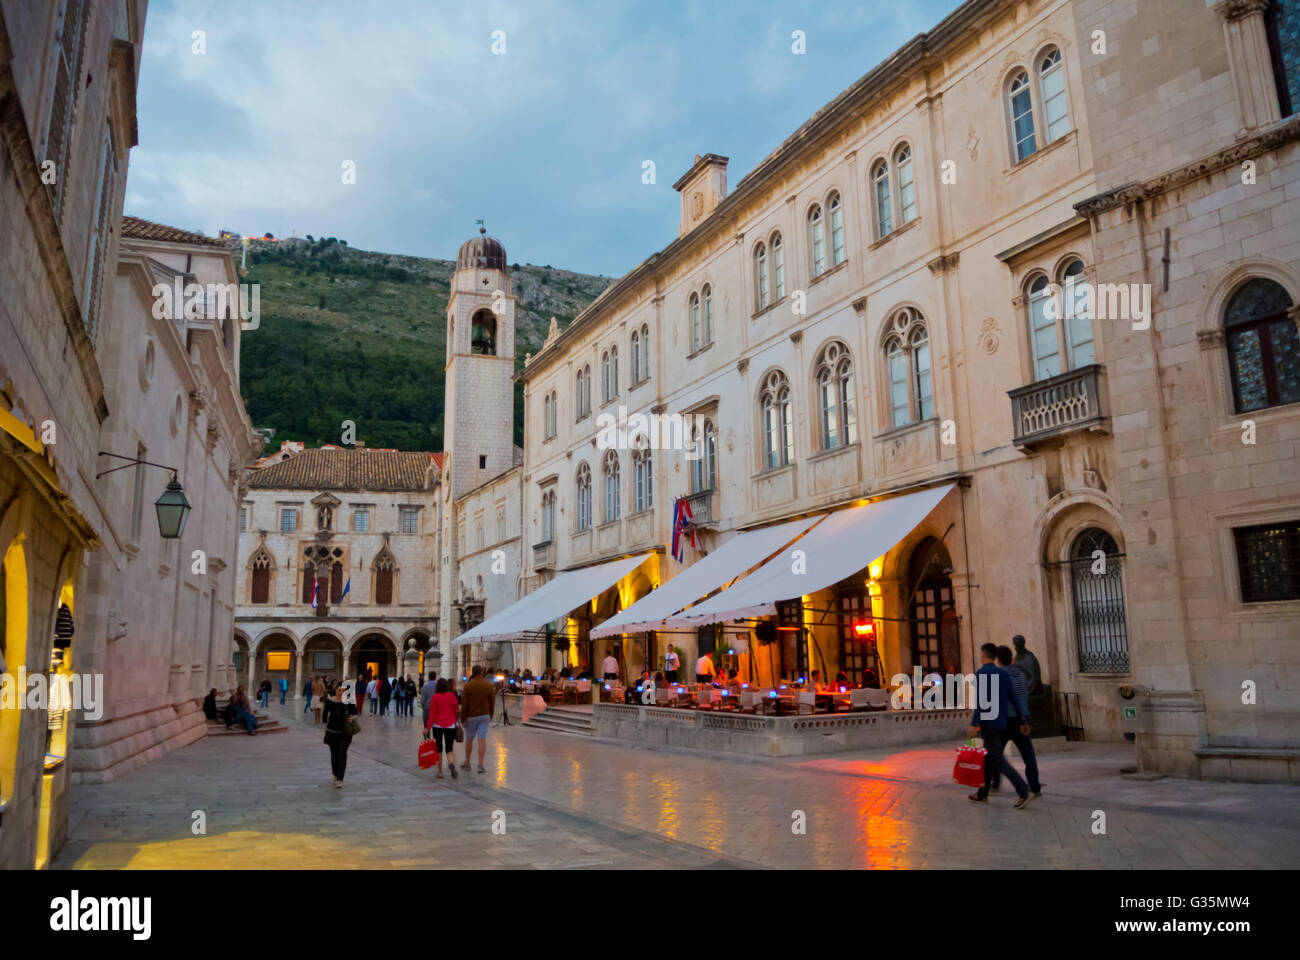 Pred Dvorom street, near Luza square, Grad, the old town, Dubrovnik, Dalmatia, Croatia Stock Photo